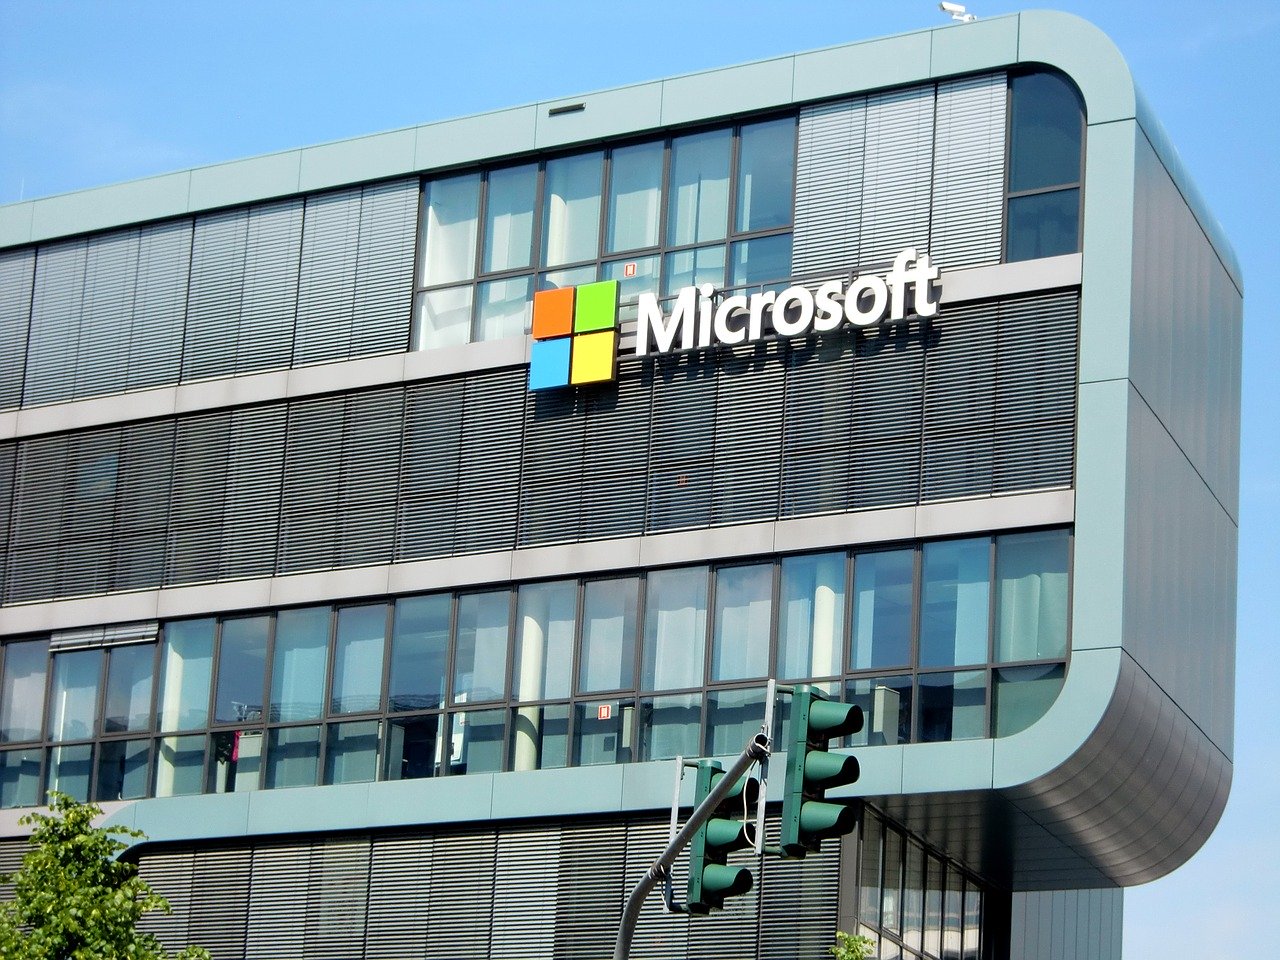 Microsoft Windows XP users – plan ahead to upgrade